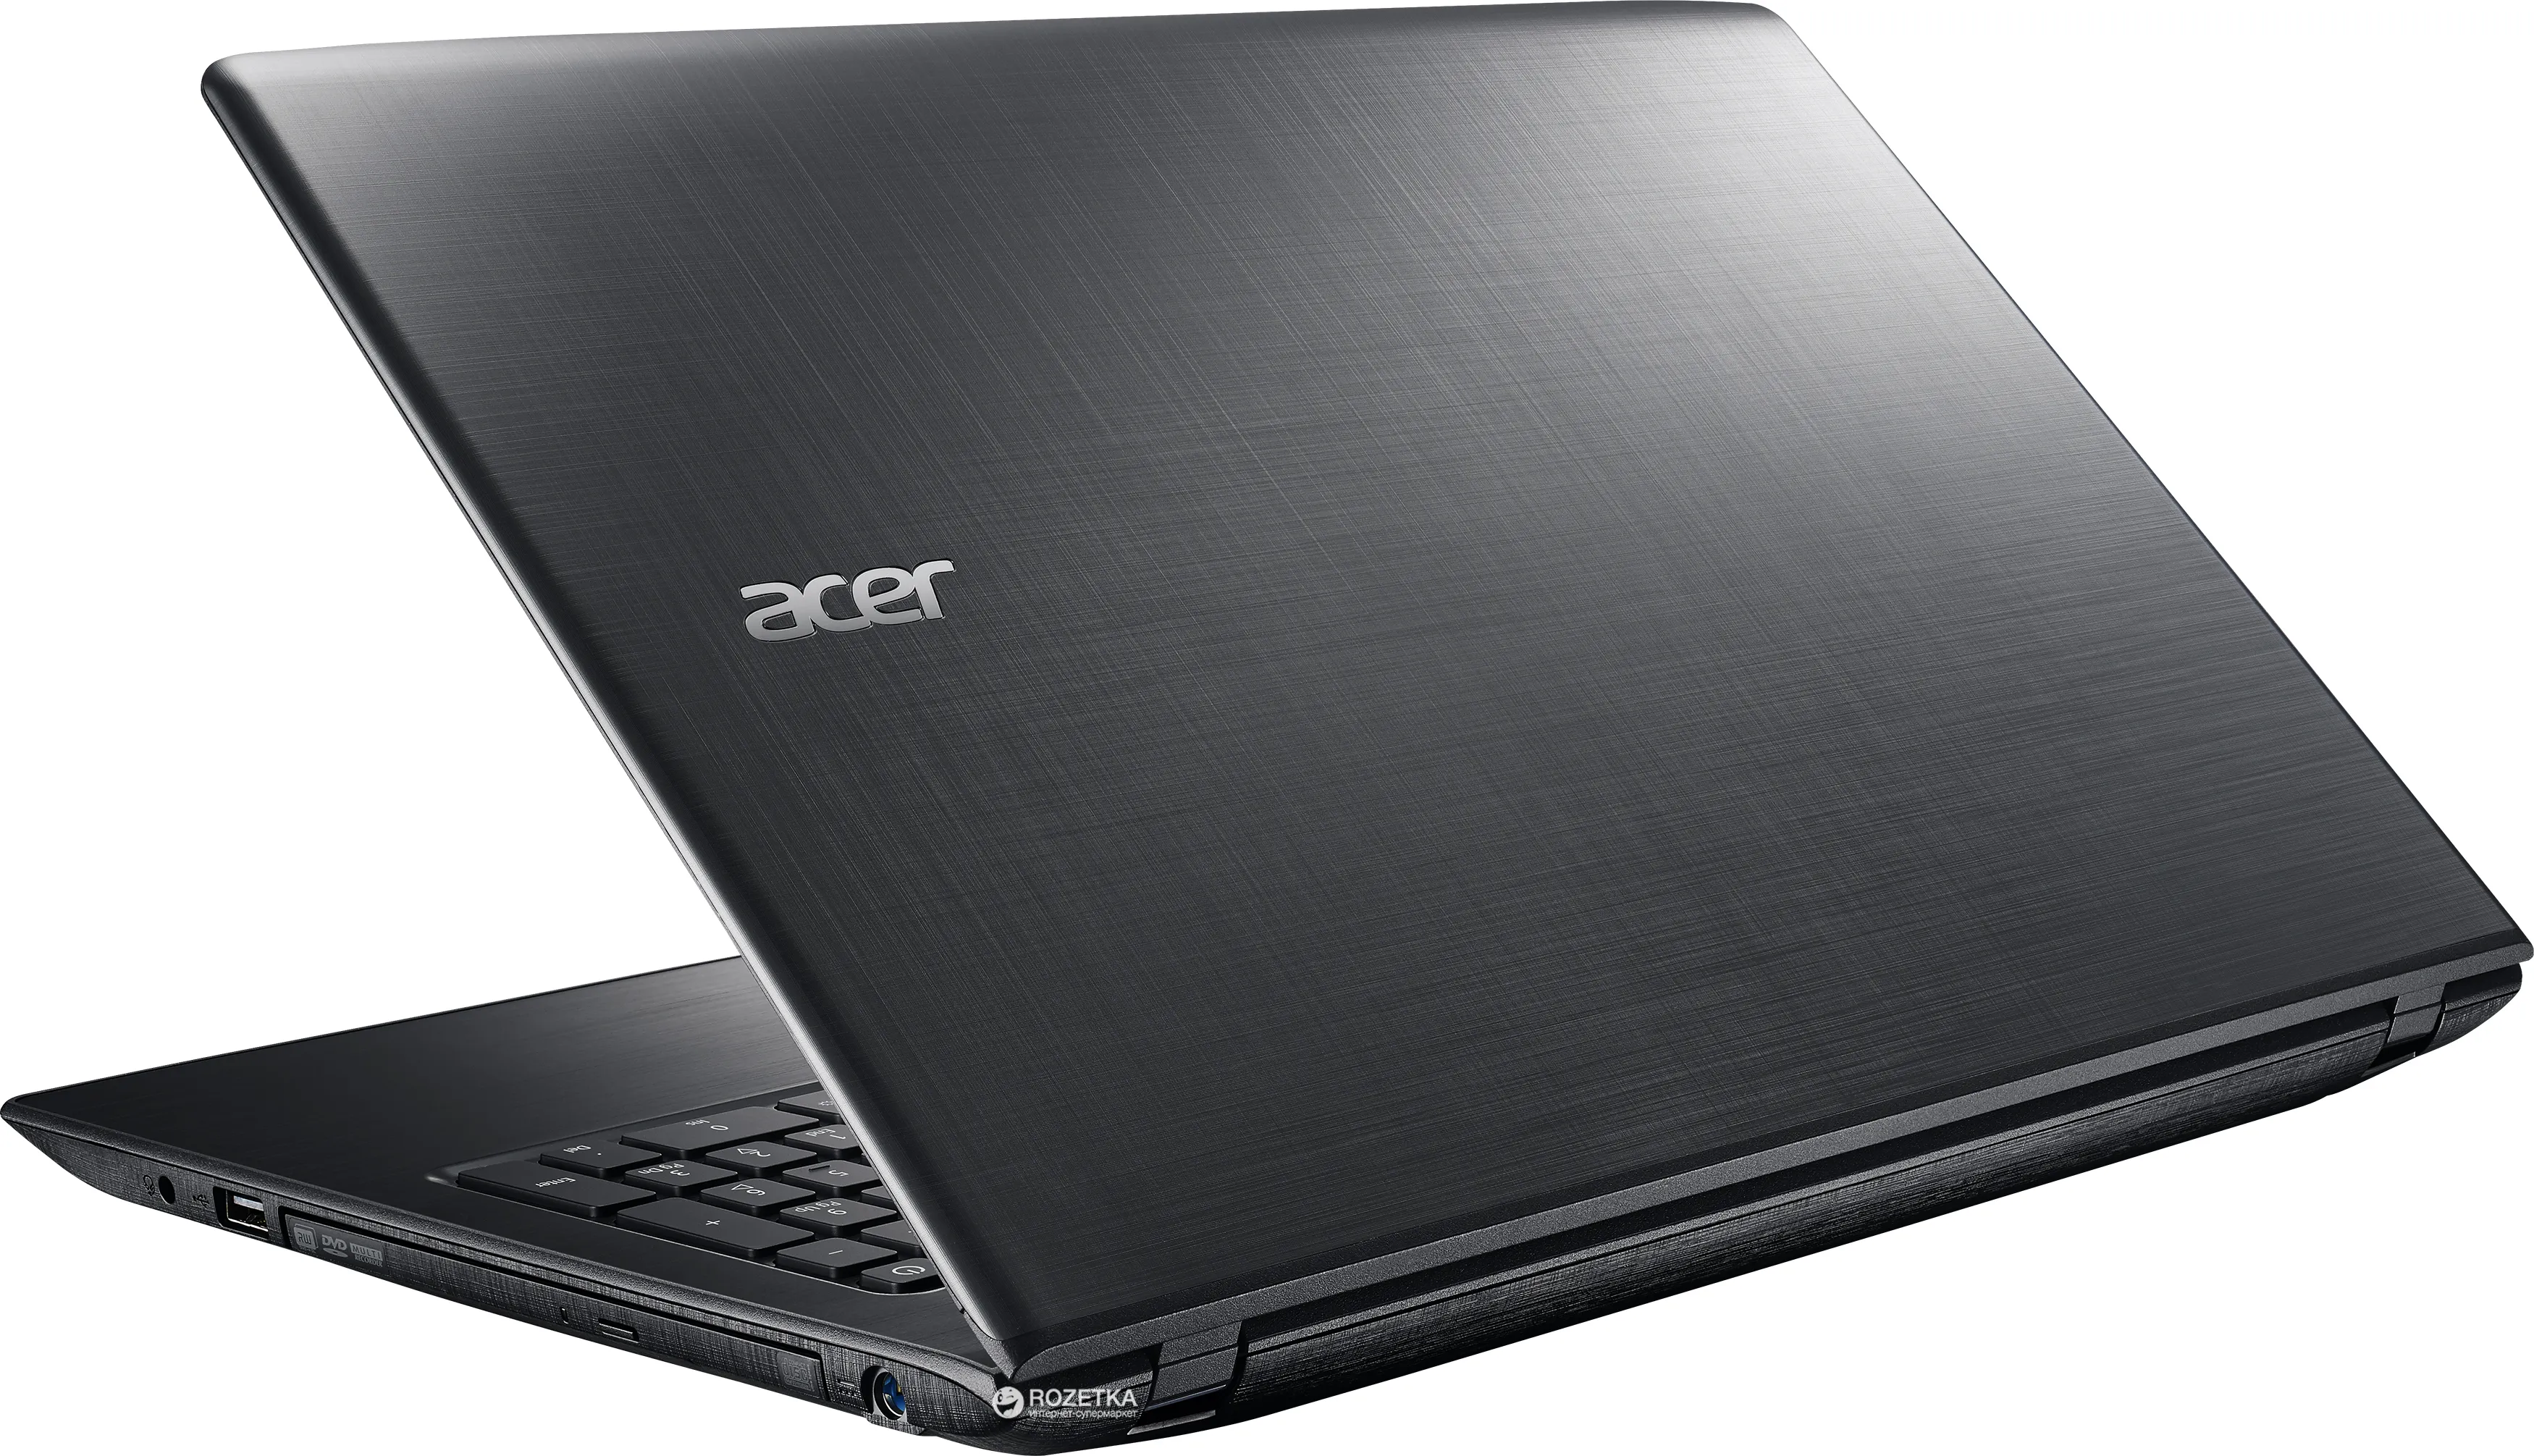 Noutbuk Acer Extensa 15/ Celeron Quad 3160/ DDR3 4 GB/ 500GB HDD /15.6" HD LED/ UMA/ DVD / RUS#7